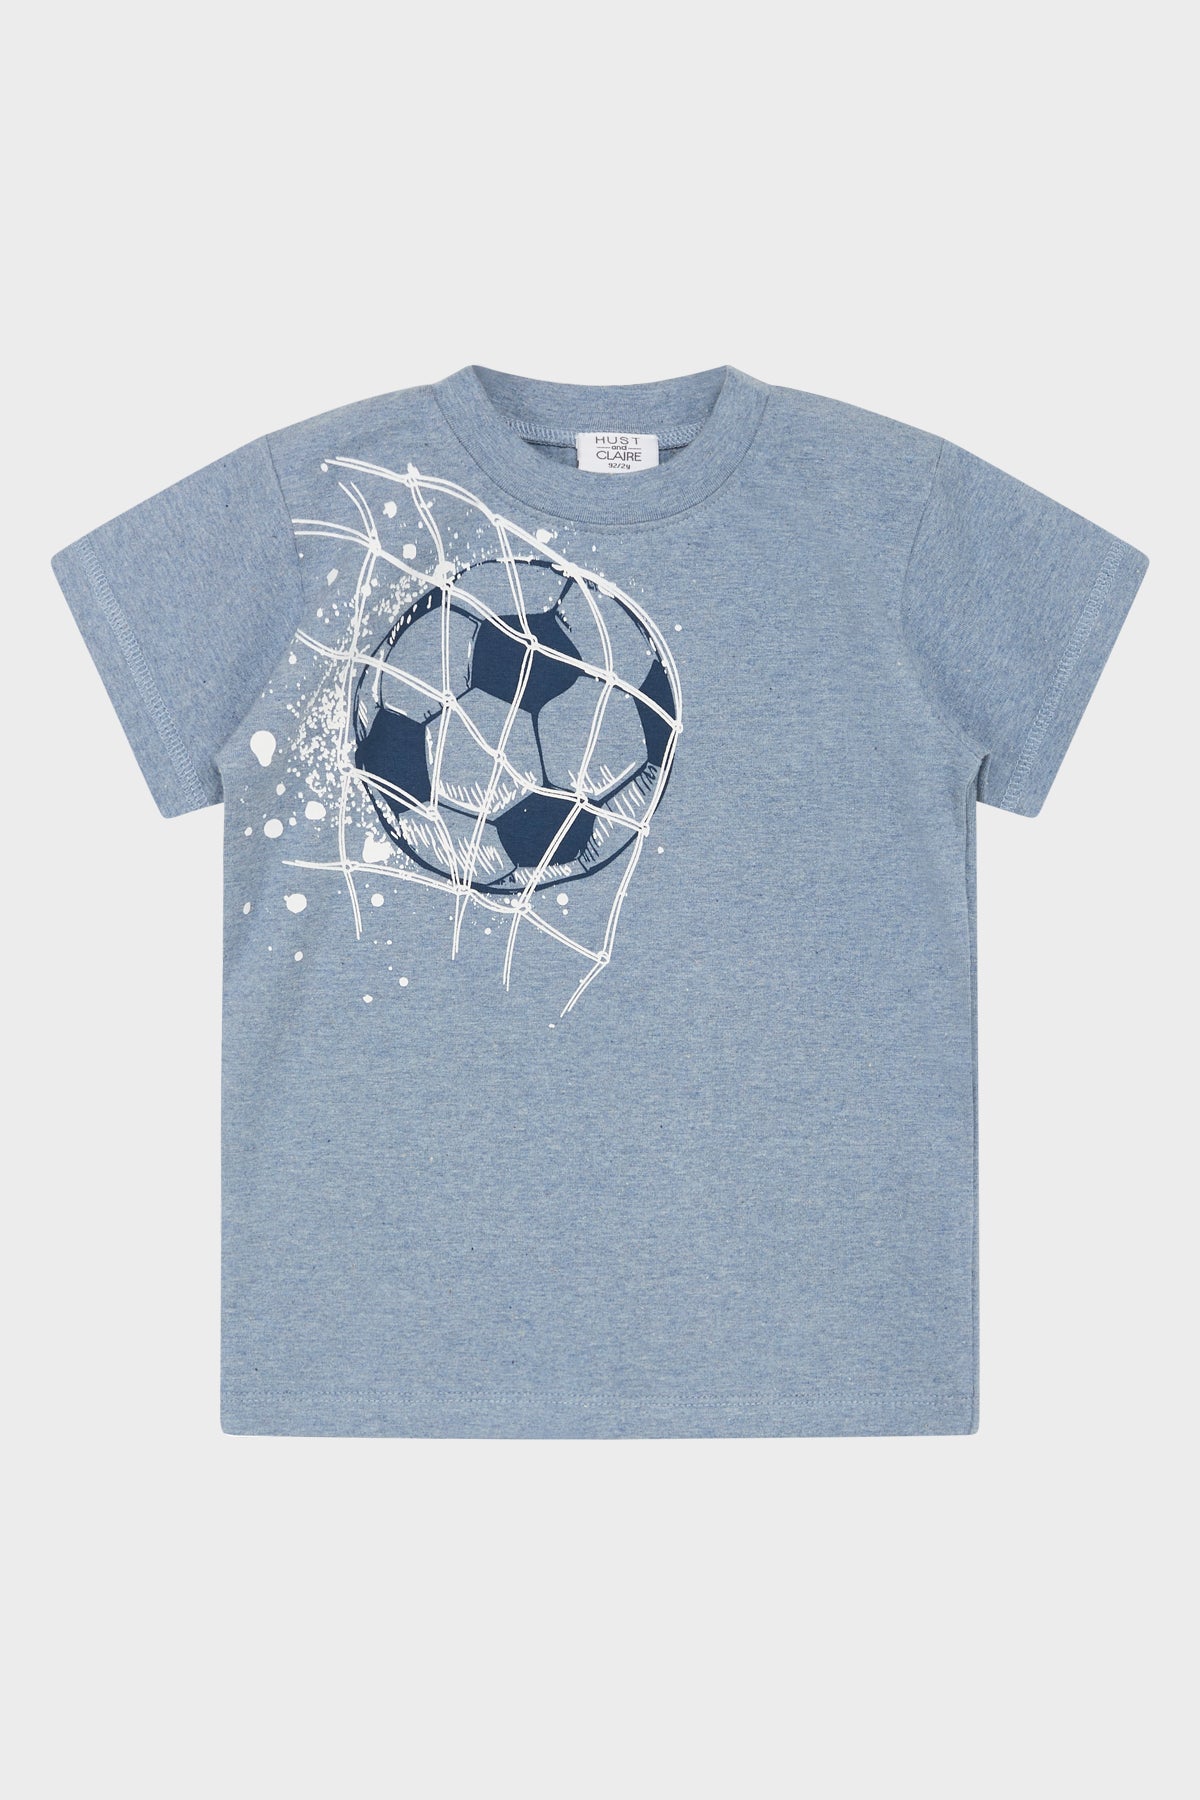 Kurzarm-Shirt "Arthur" mit Fußball-Print - Hust&Claire